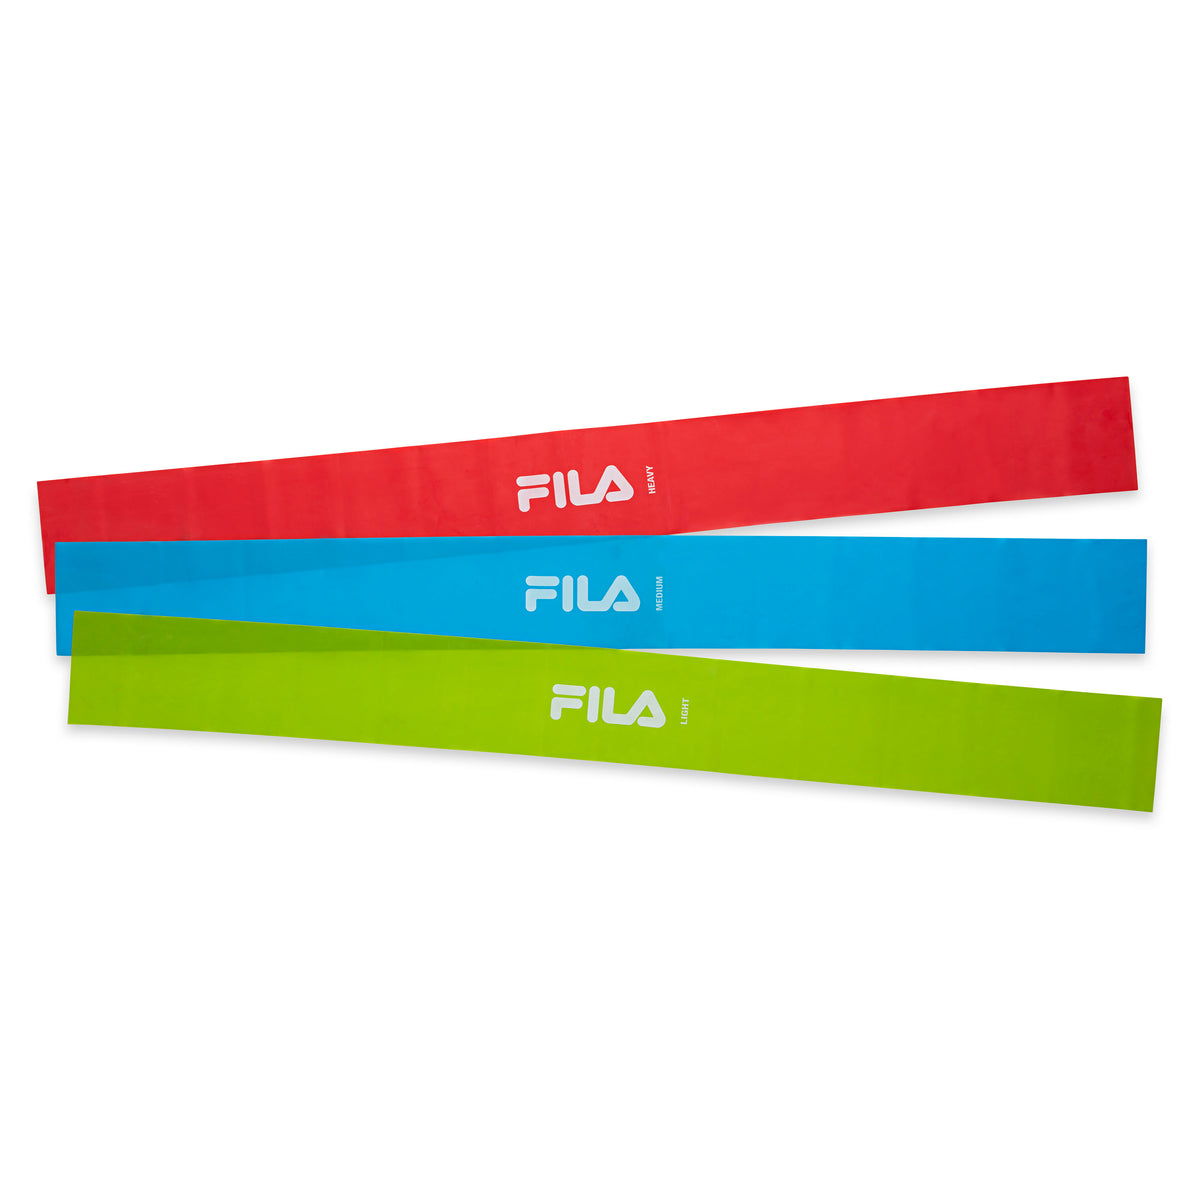 FILA Flat Resistance Bands 3-Pack all three flat top